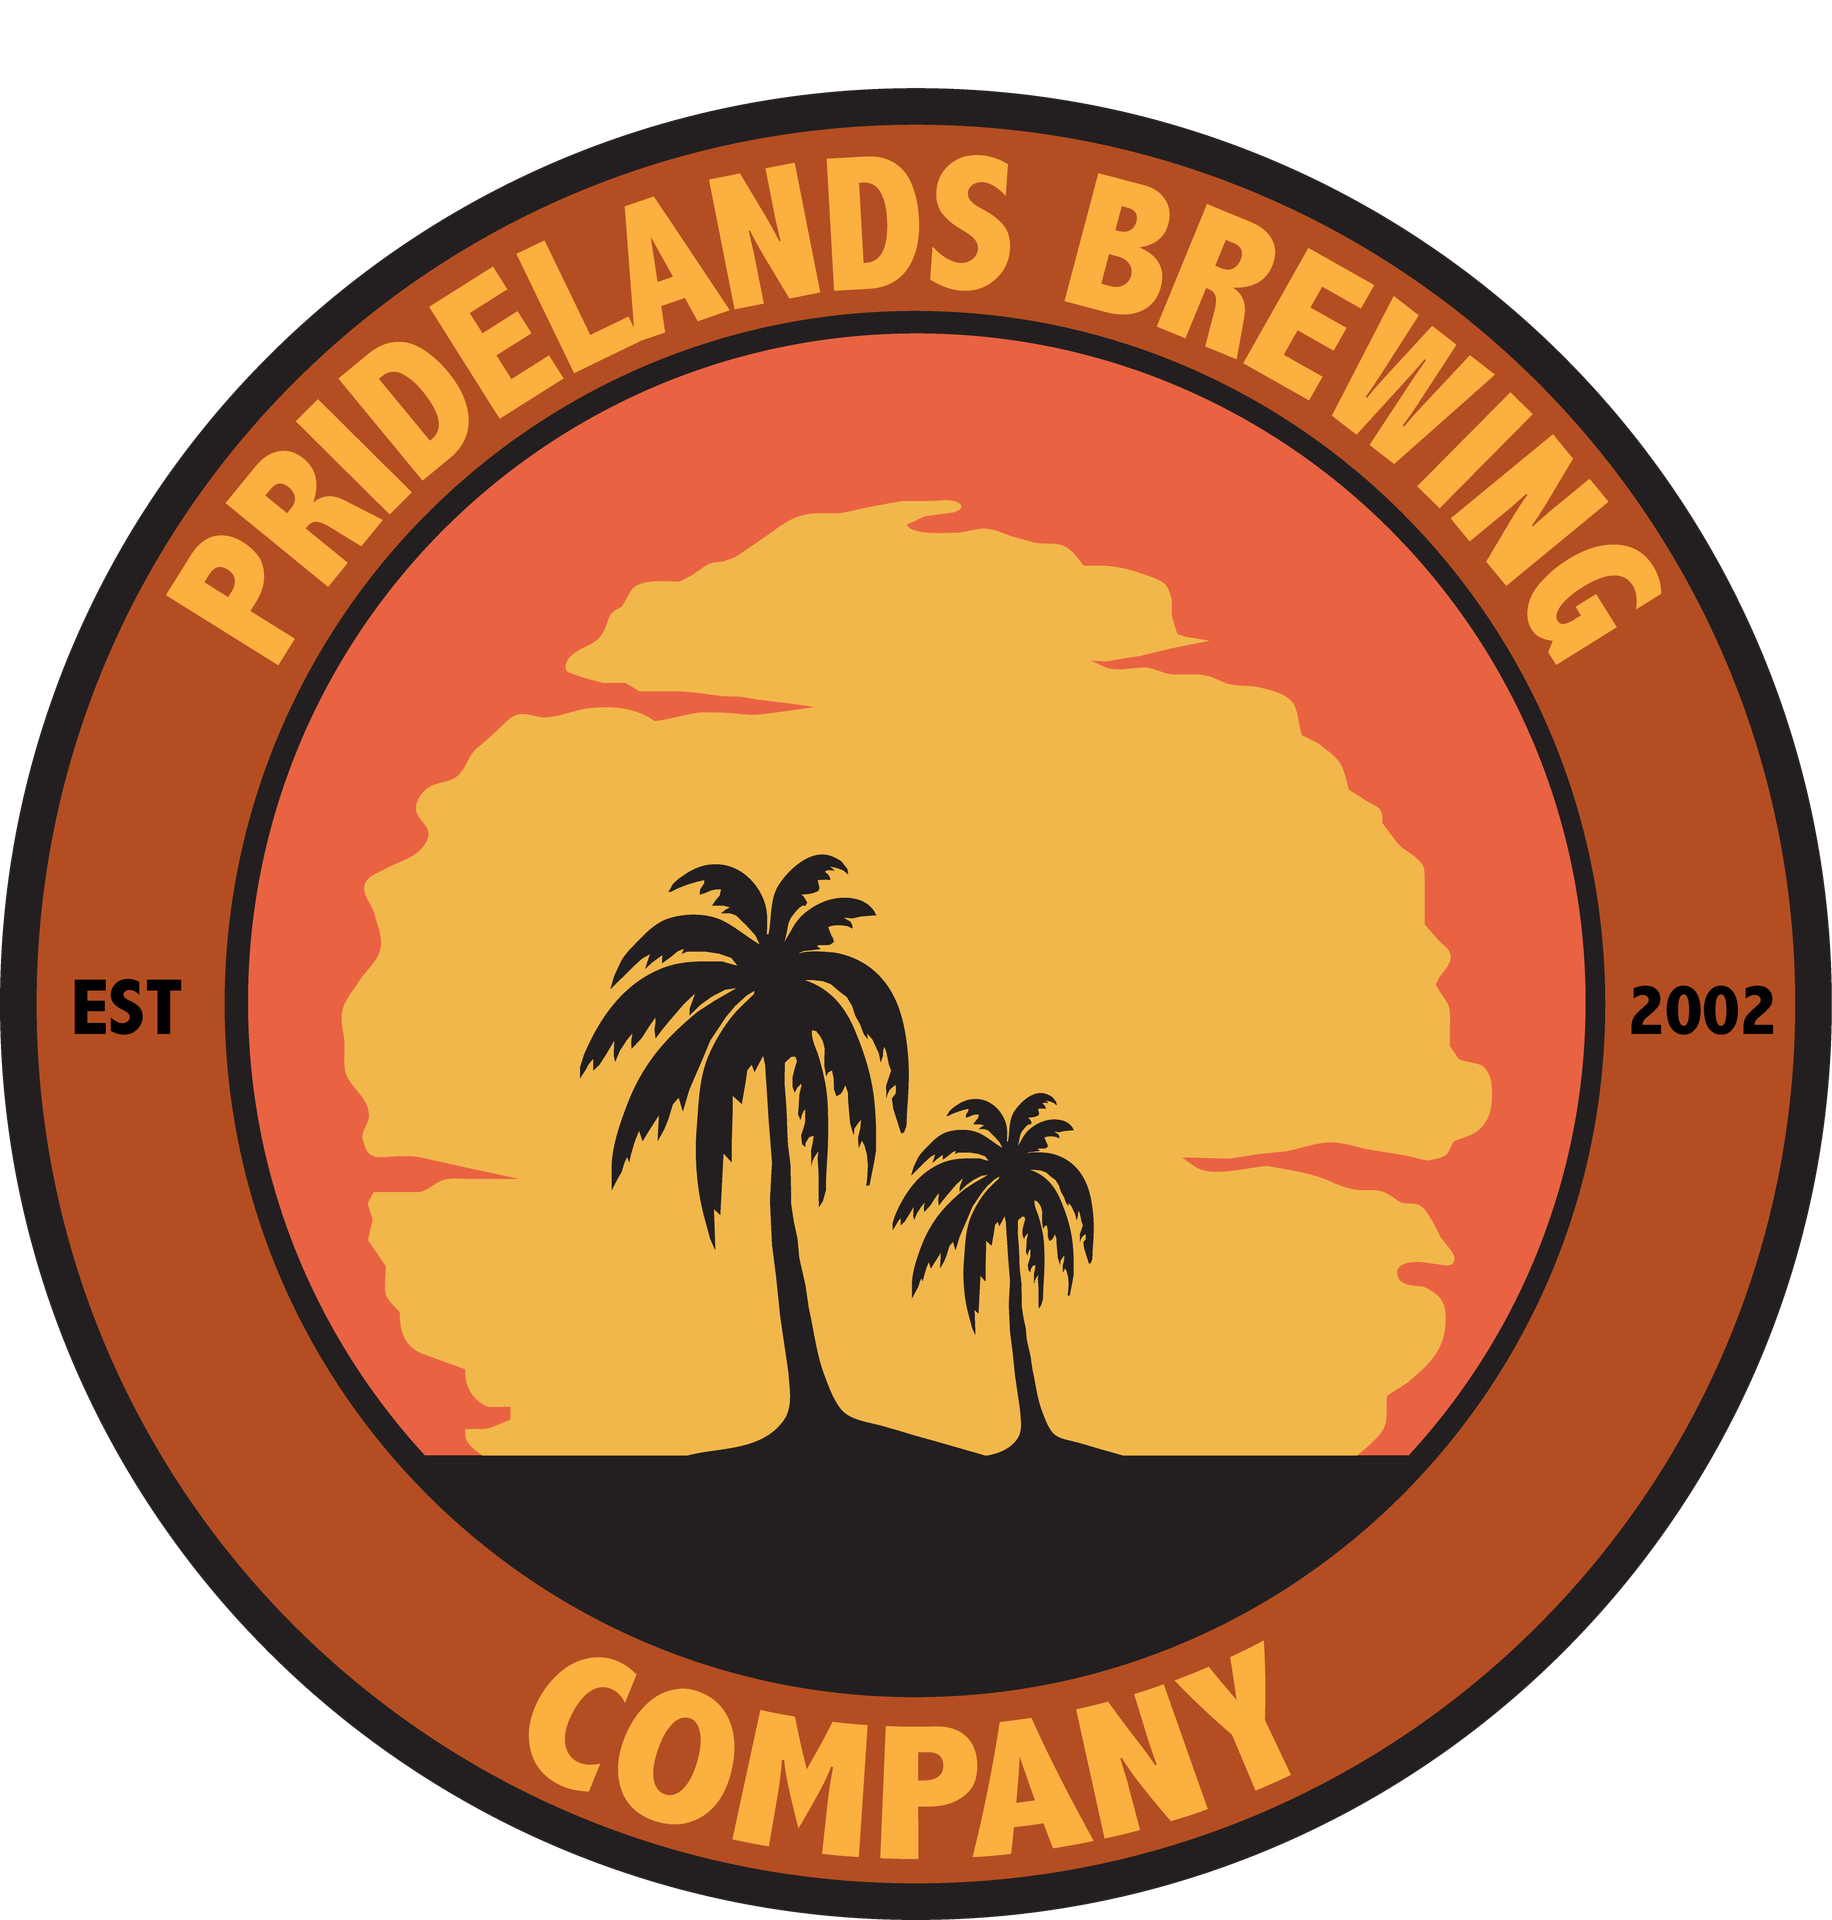 The Pridelands Brewery